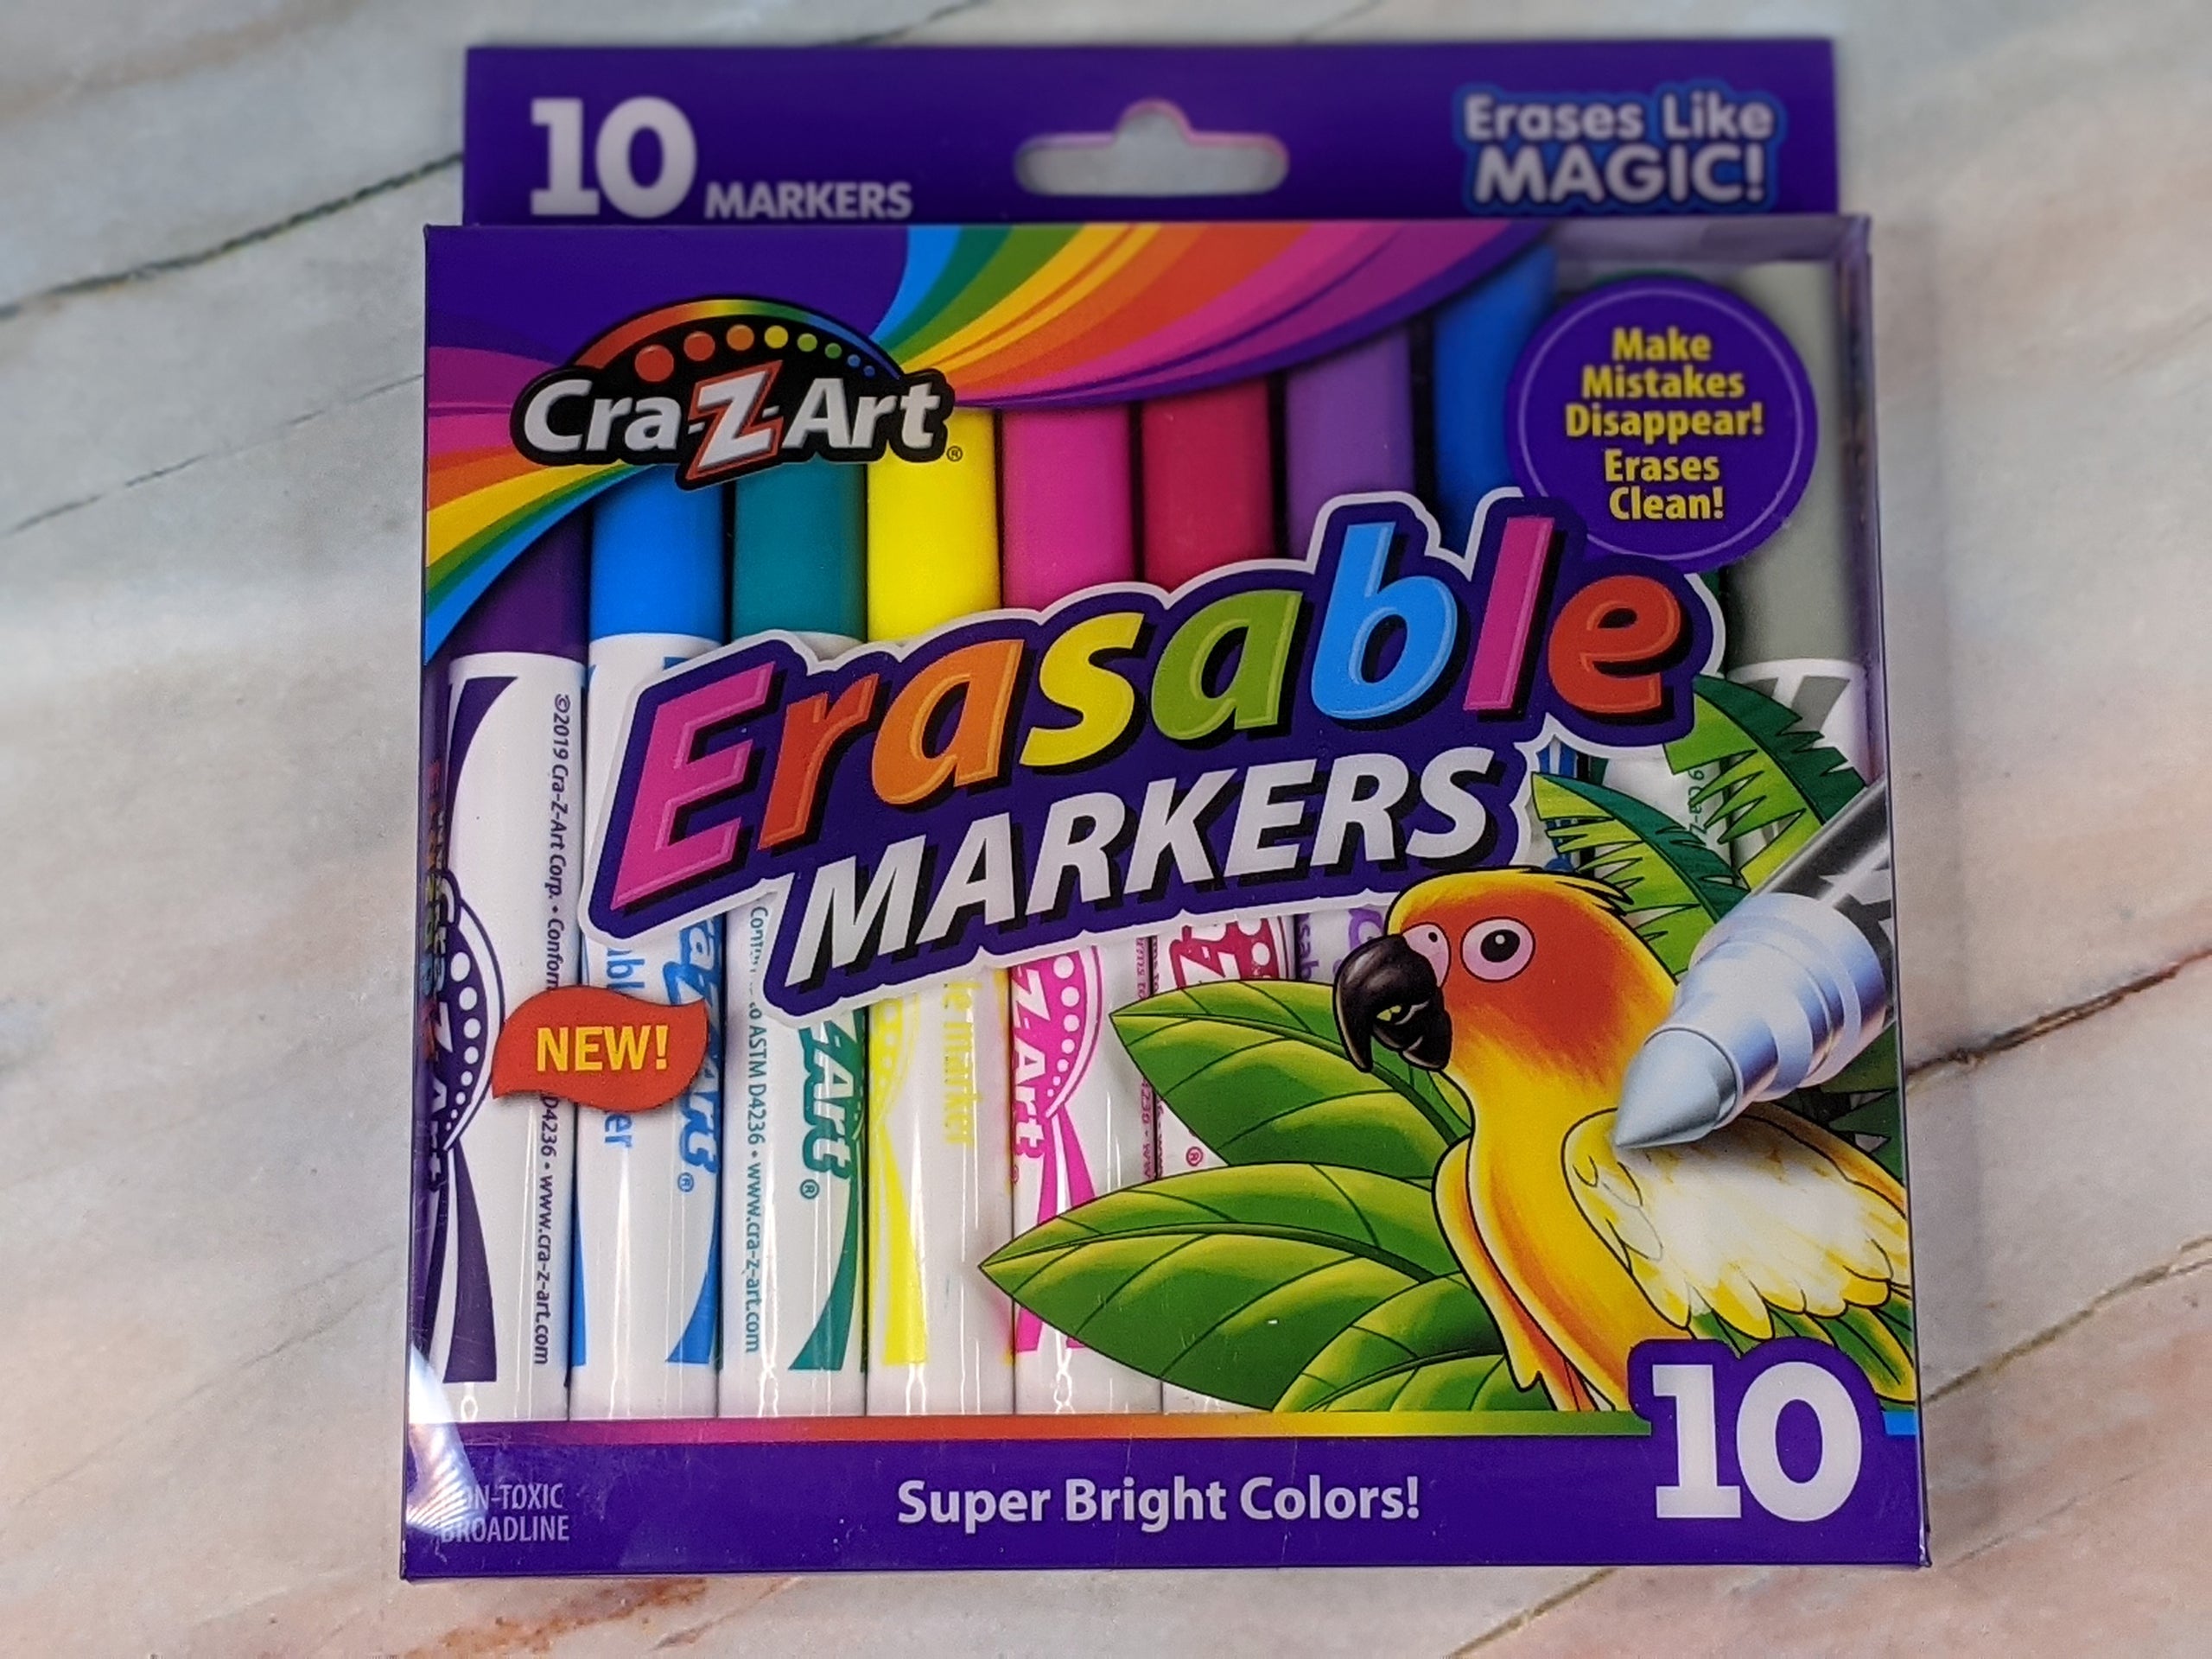 Cra-Z-Art Erasable Markers Review 